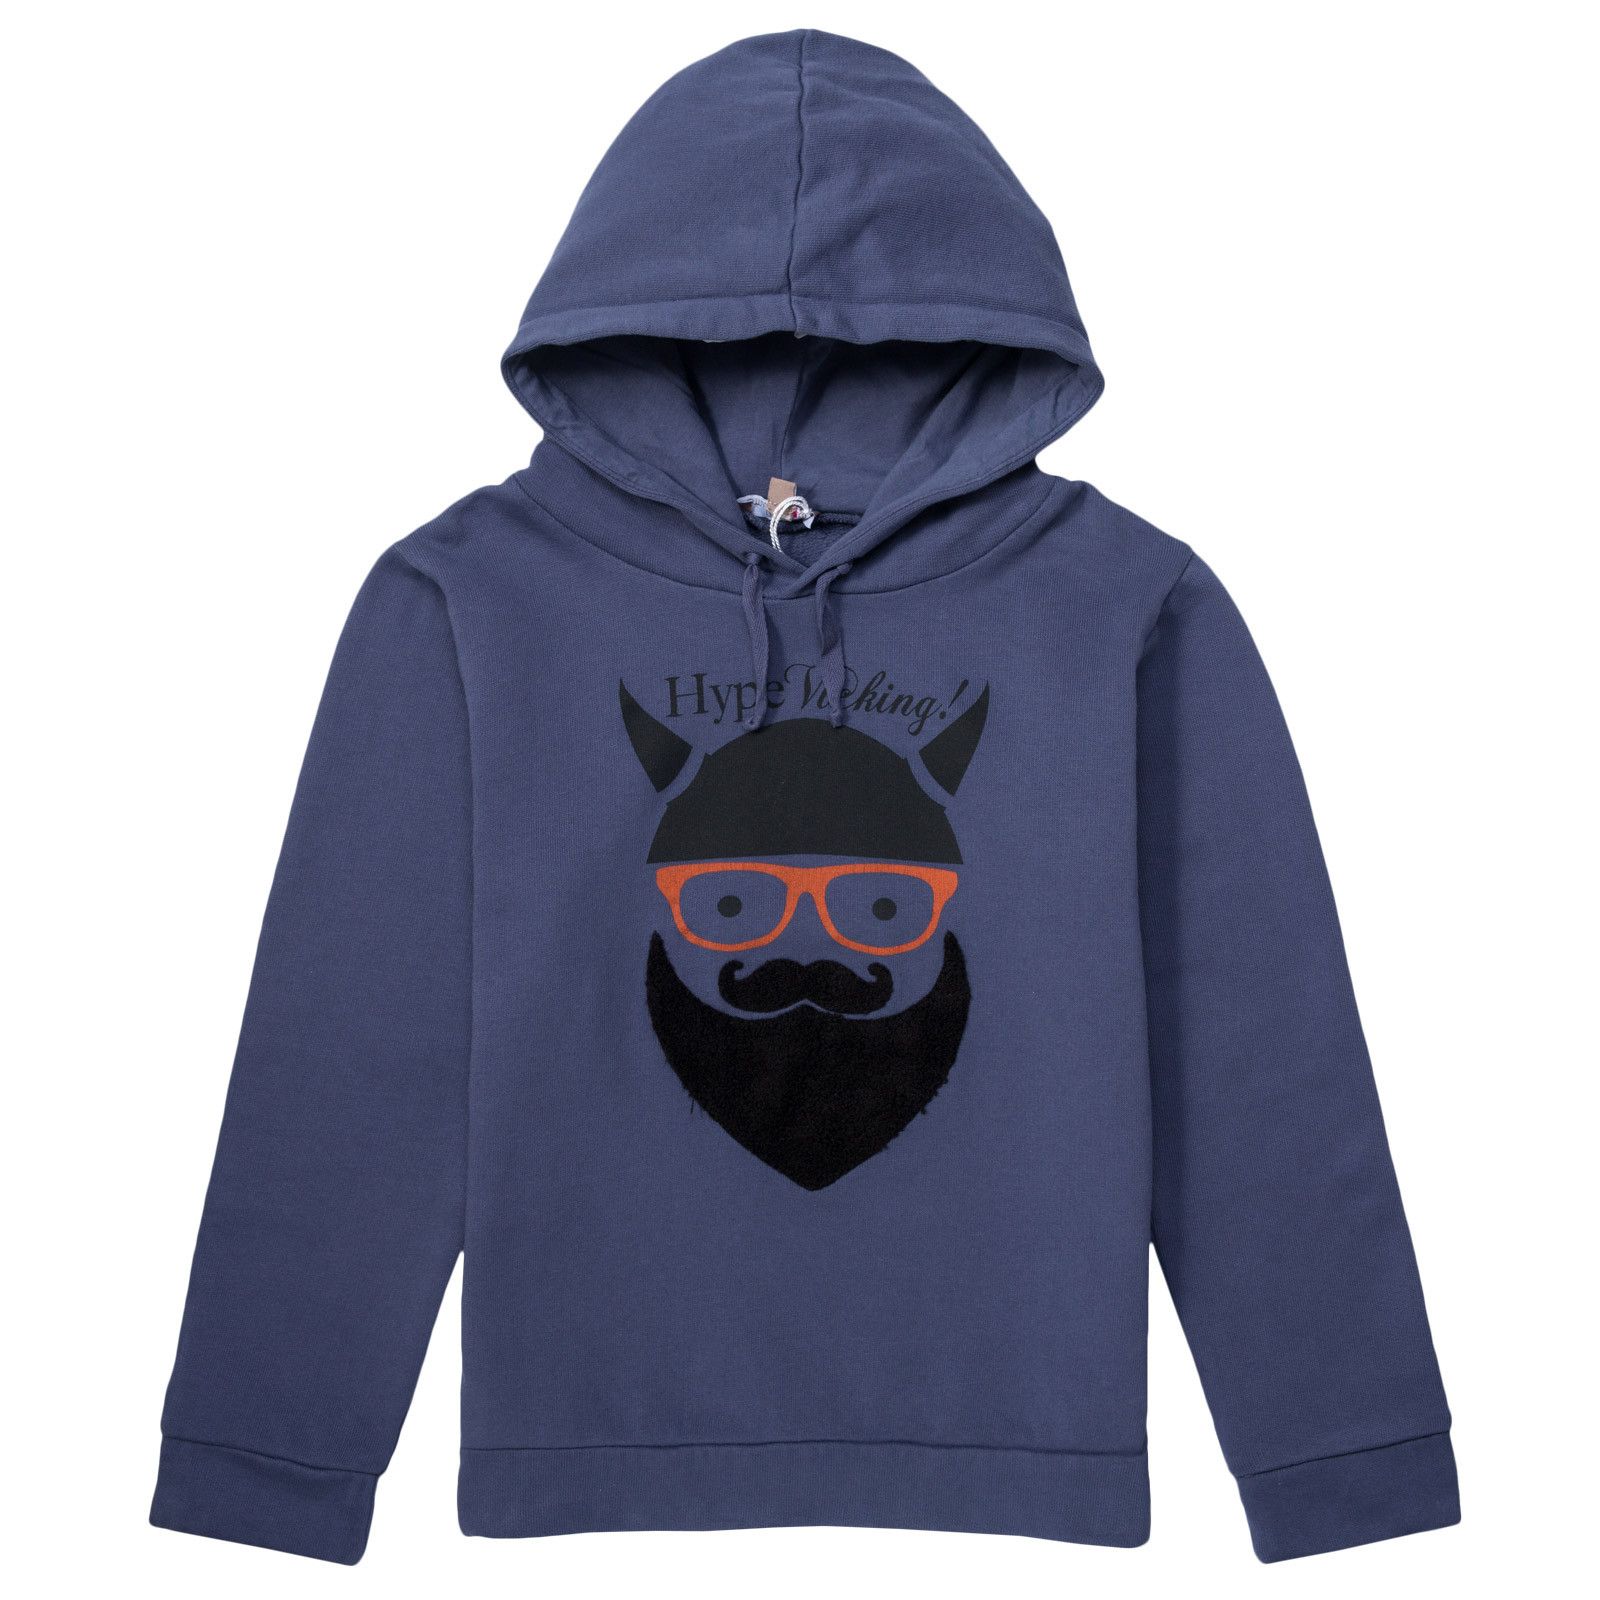 Boys Navy Blue Viking Beard Logo Hooded Zip-up Tops - CÉMAROSE | Children's Fashion Store - 1